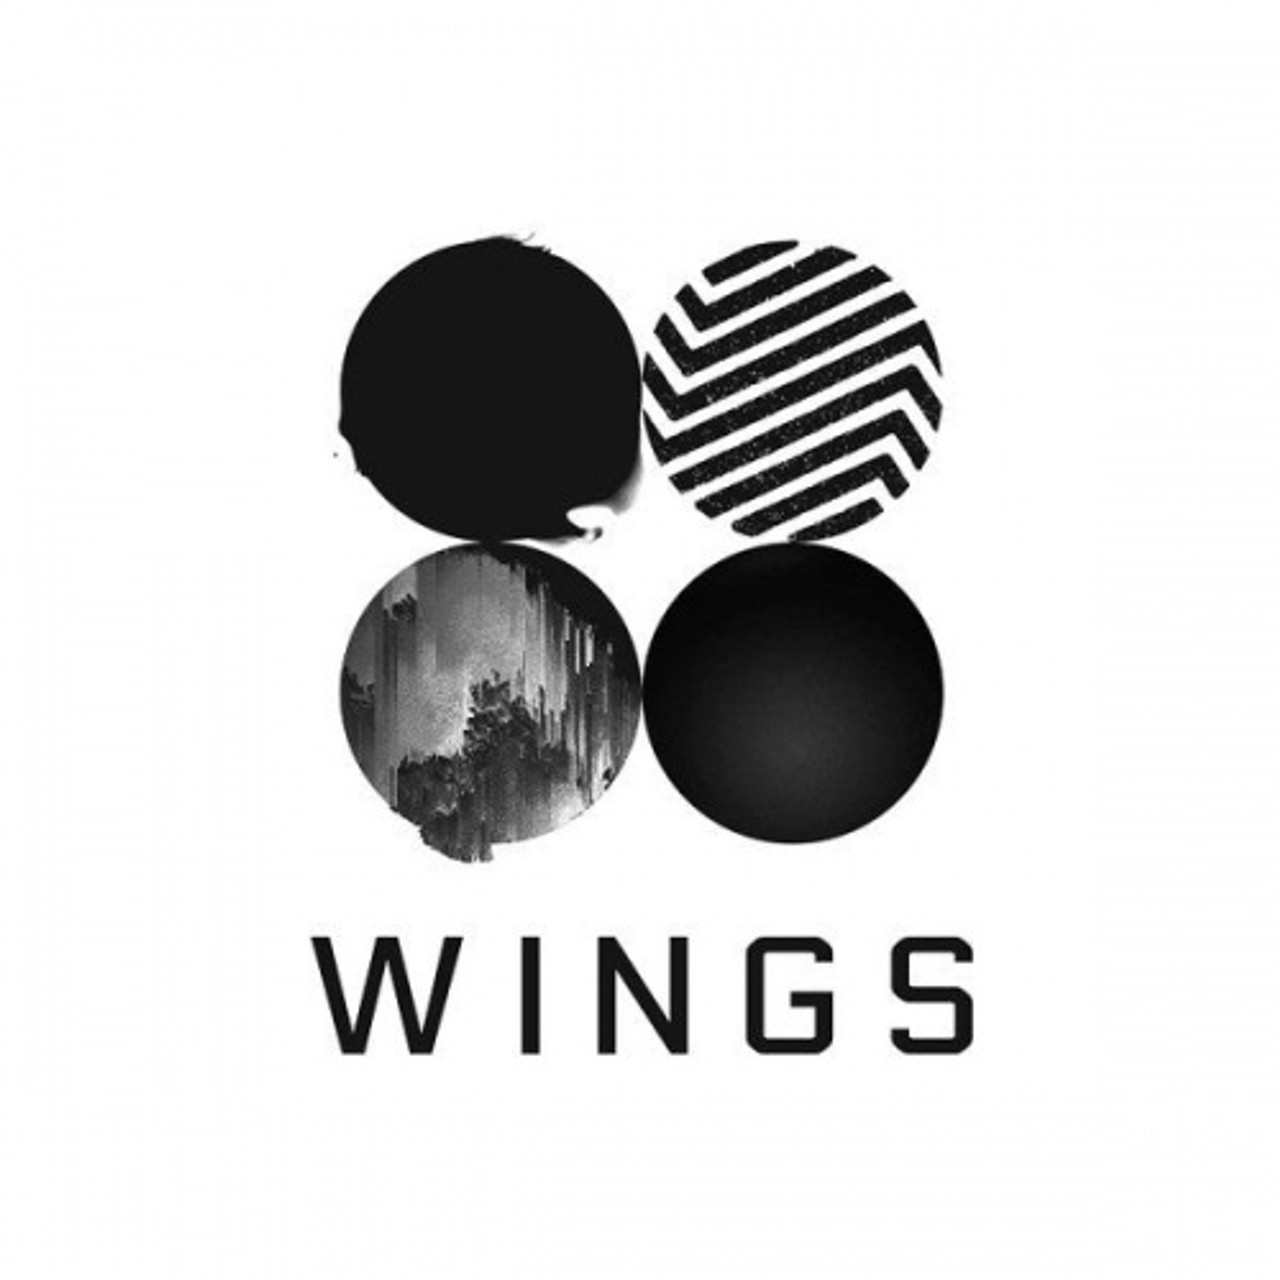 BTS - Wings - 2x LP Vinyl - Ear Candy Music